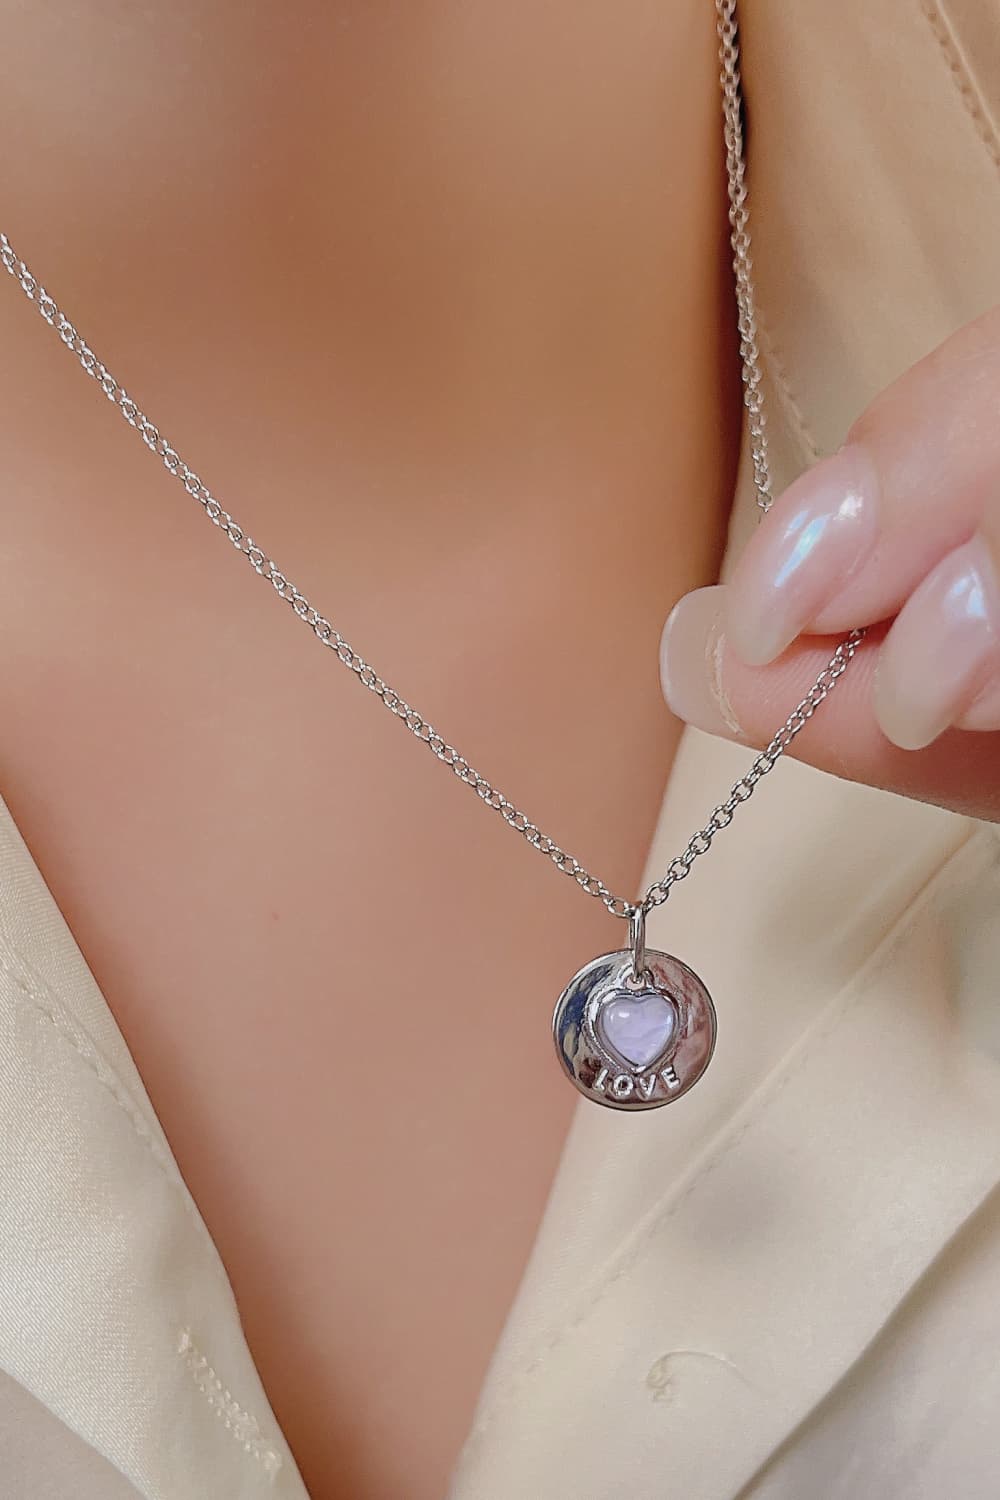 Moonstone LOVE Heart Pendant 925 SS Necklace - ONLINE EXCLUSIVE